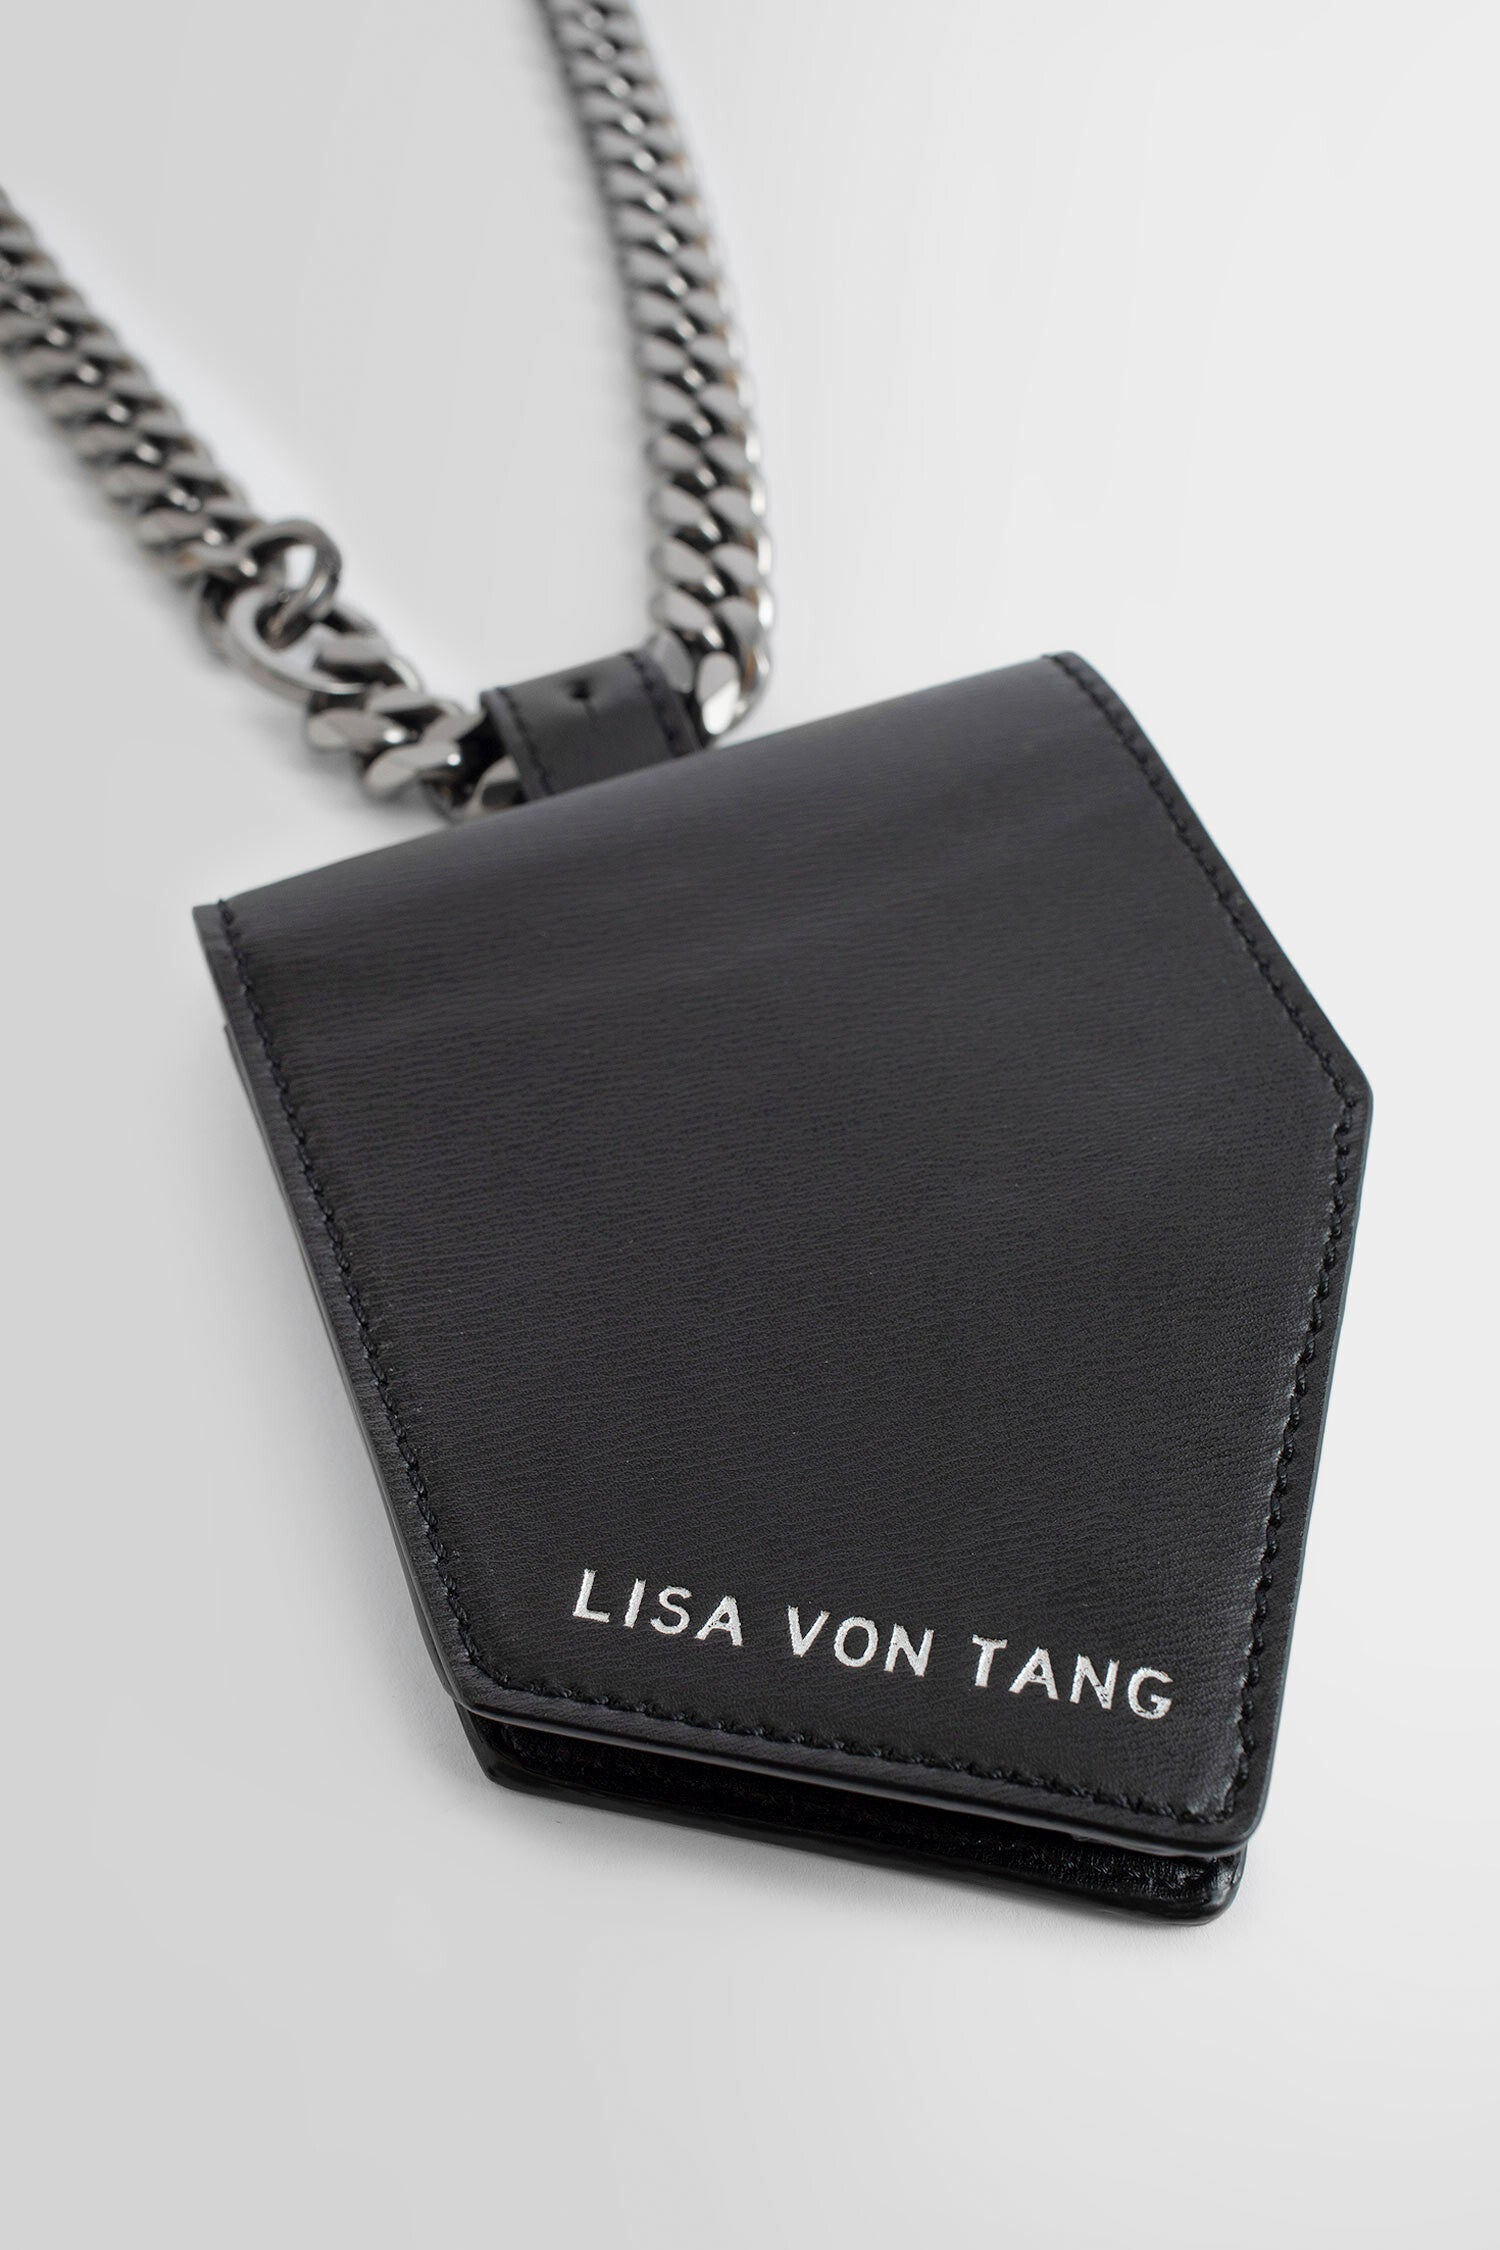 LISA VON TANG WOMAN BLACK CROSSBODY BAGS